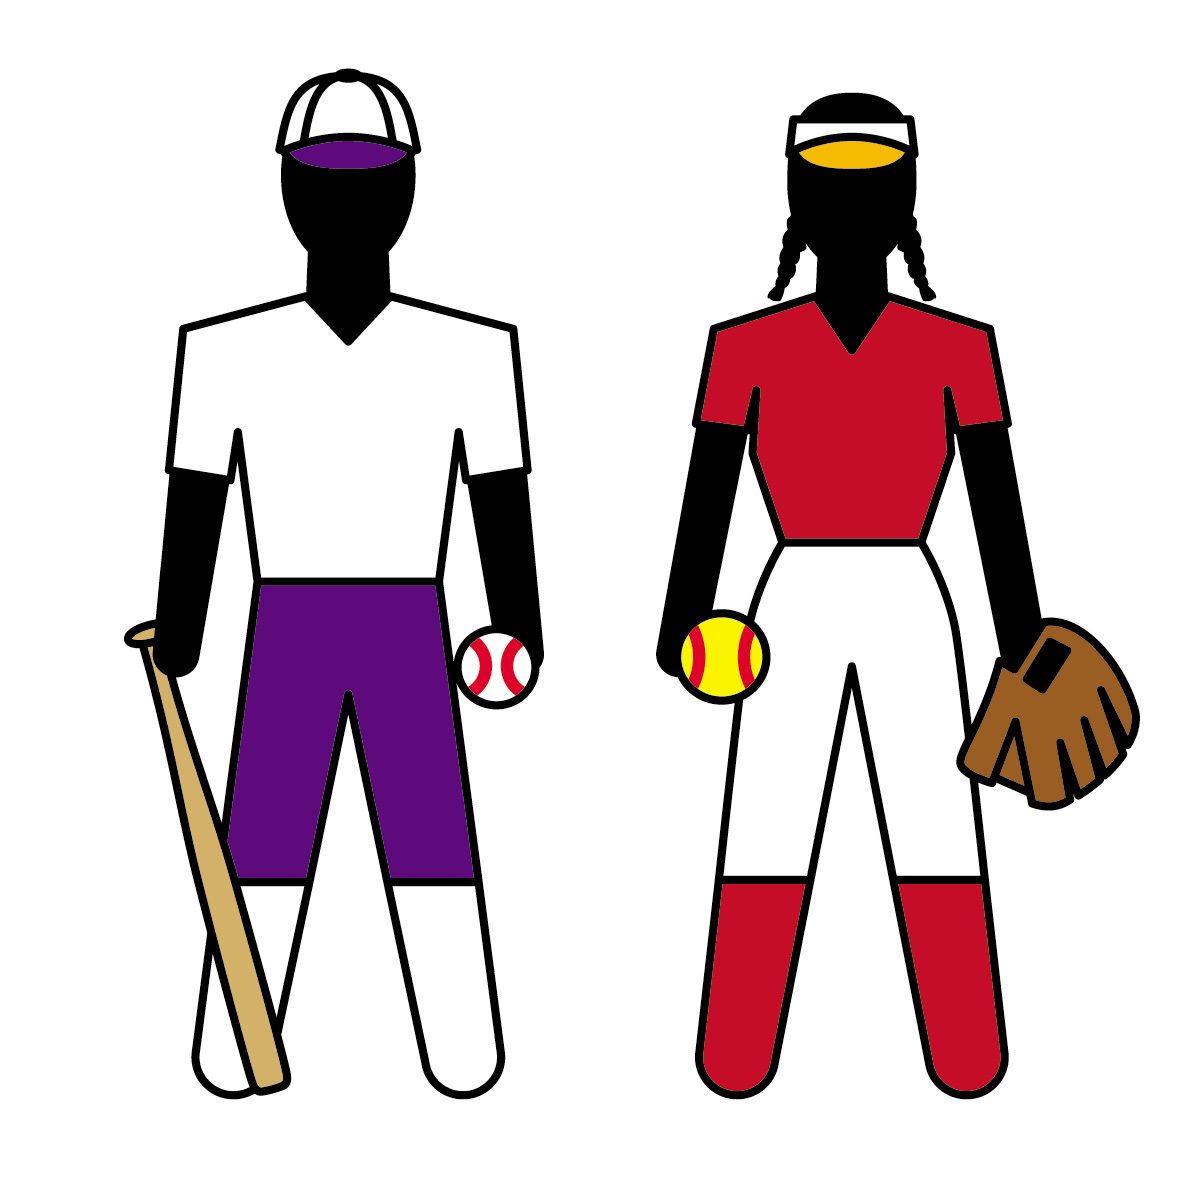 Clip Art: Basic Words: Cap B&W Labeled · Clip Art: Baseball B&W · Clip Art: Athletes: Baseball/Softball Color